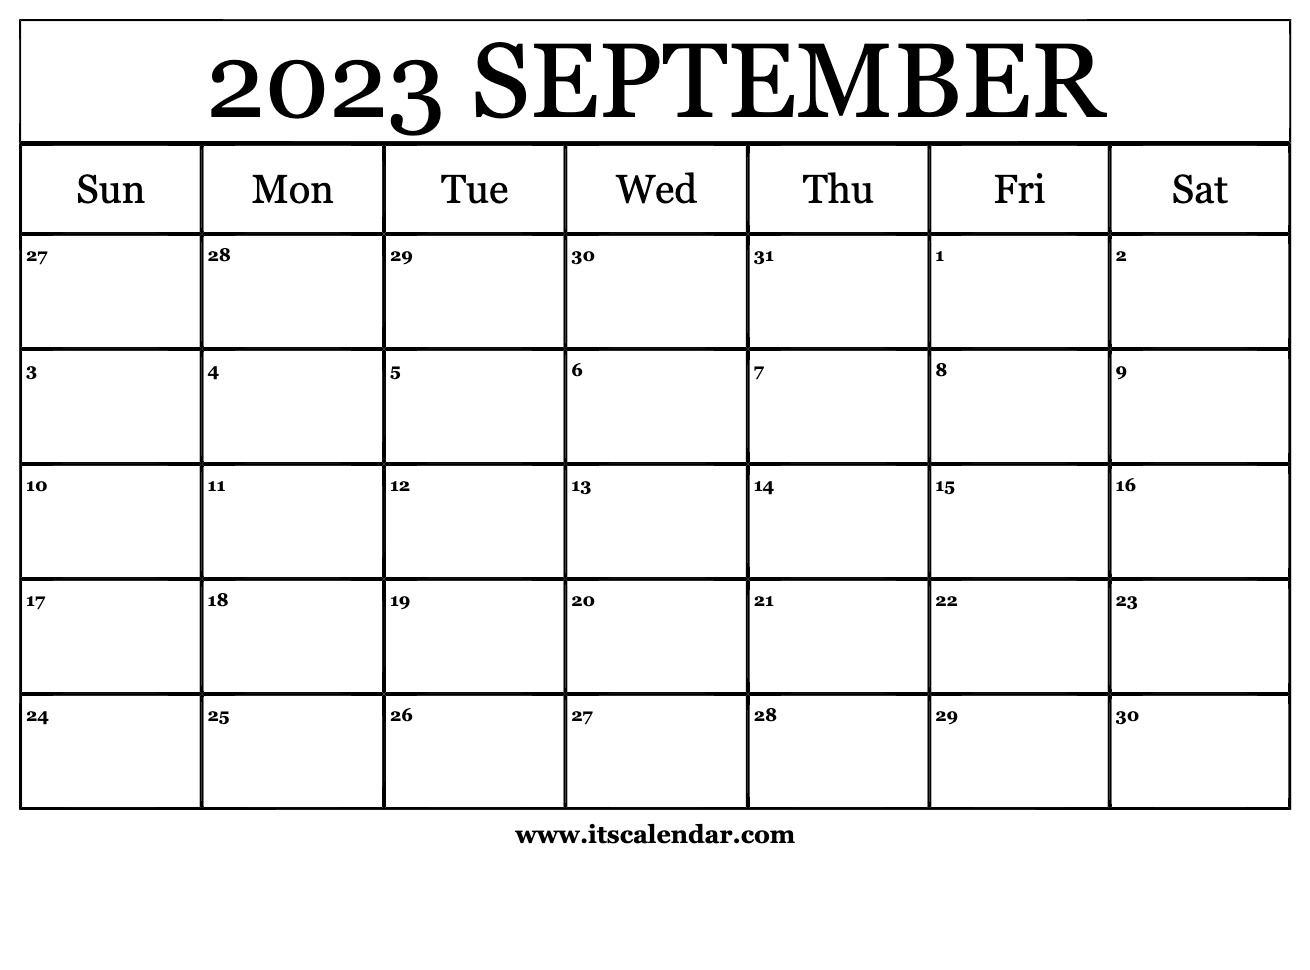 september-2023-calendar-print-out-september-2023-calendar-free